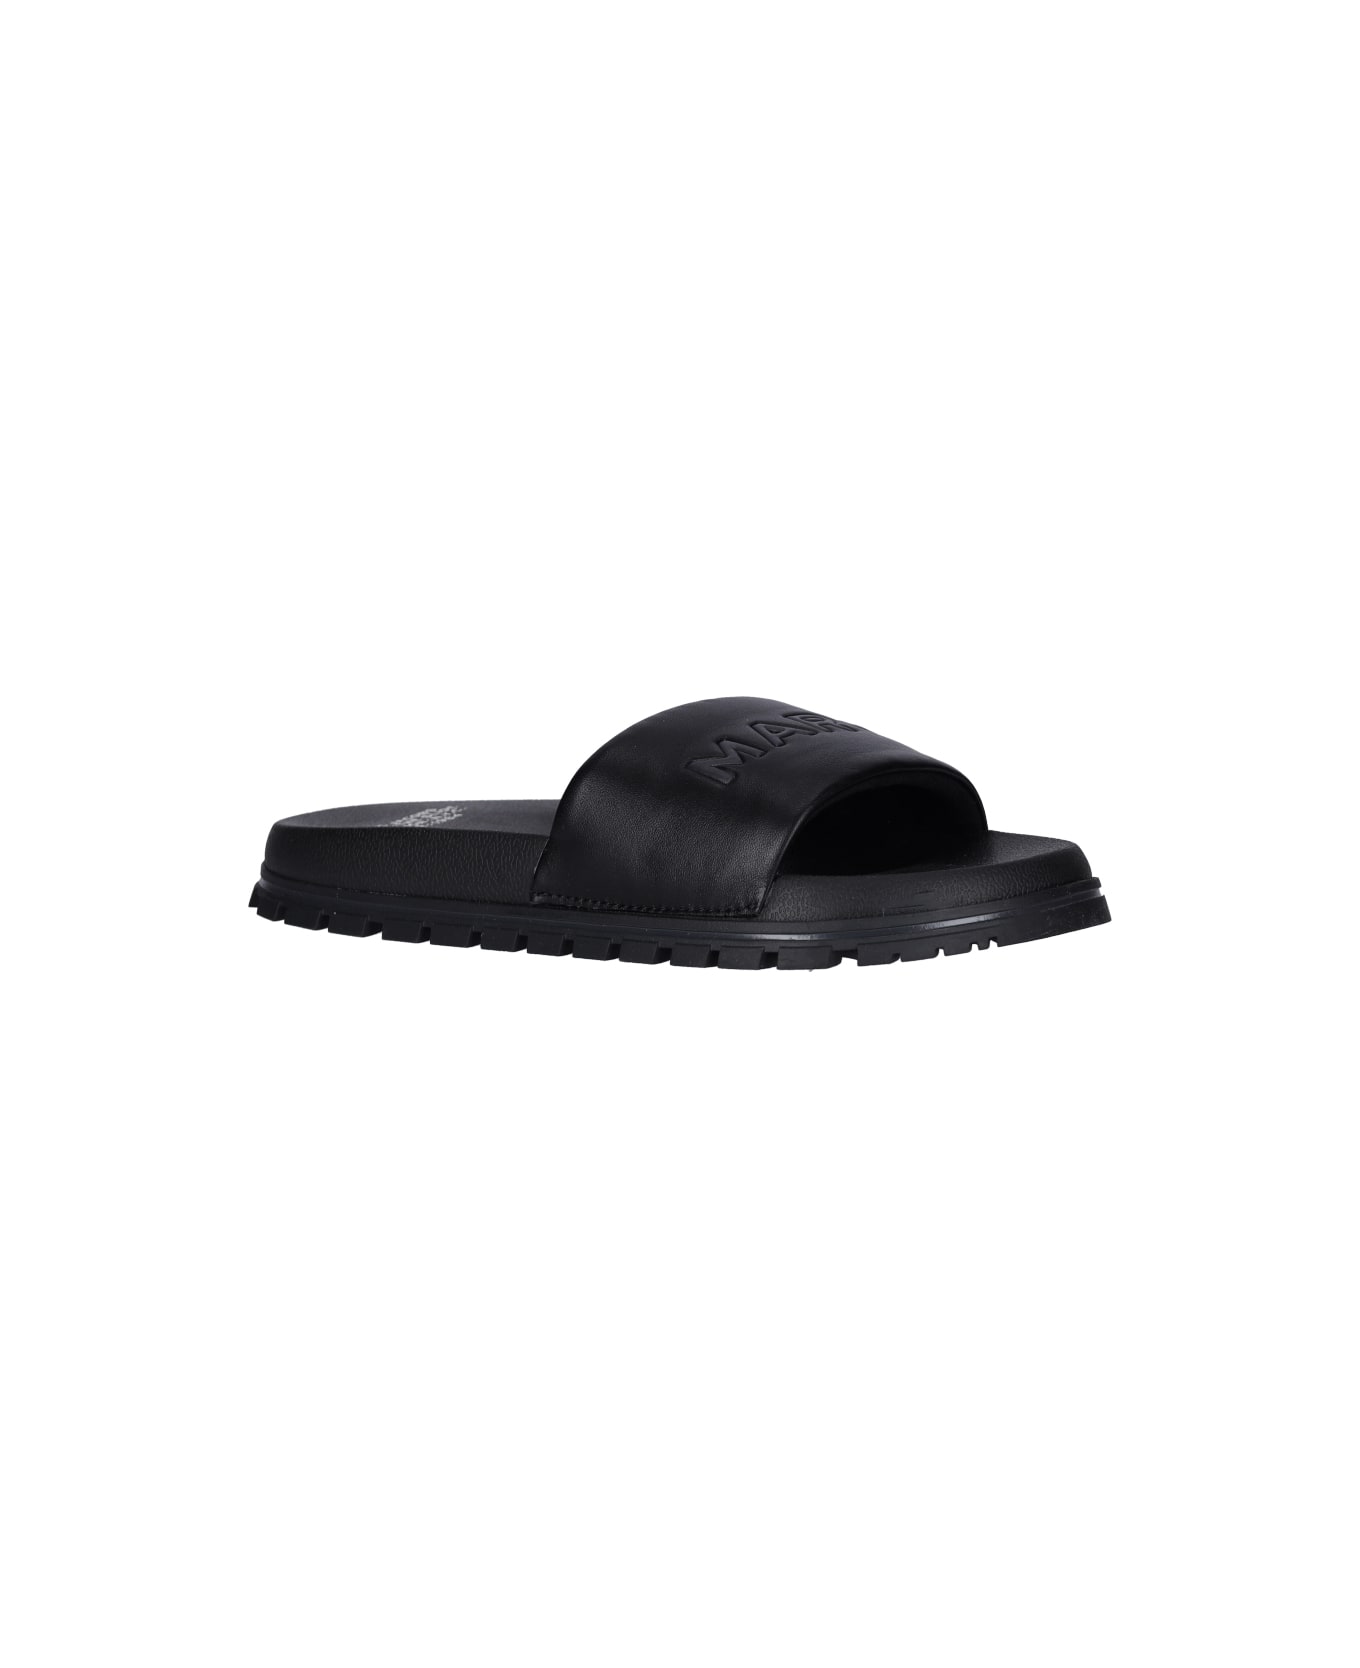 Marc Jacobs Slide Sandals 'the Leather' - Black